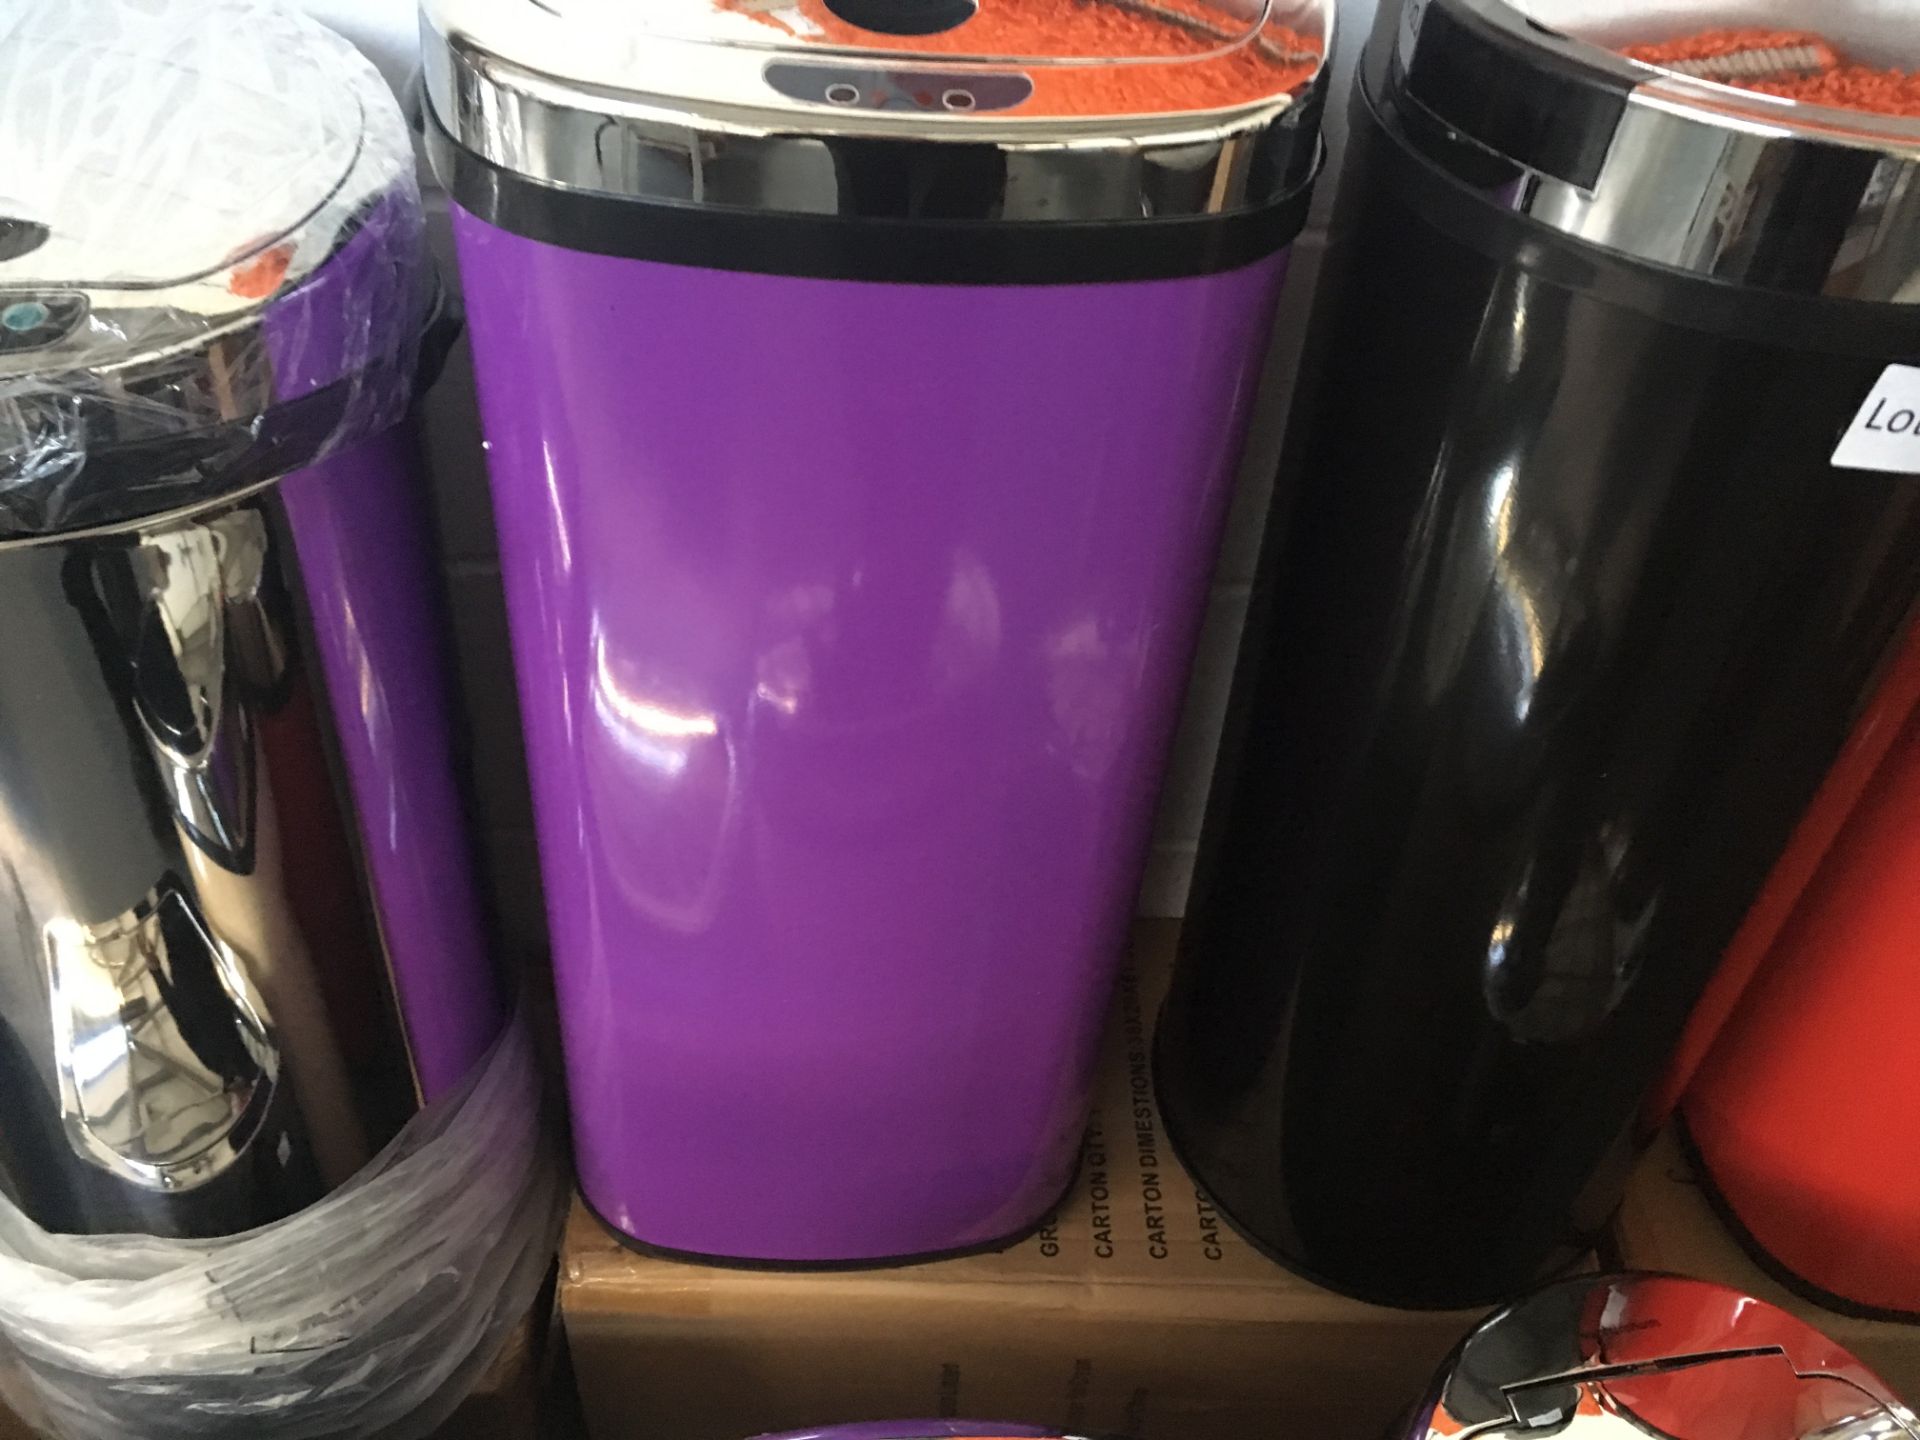 Square purple 42 litre touch sensor bin. Small dent to rear. Customer return.